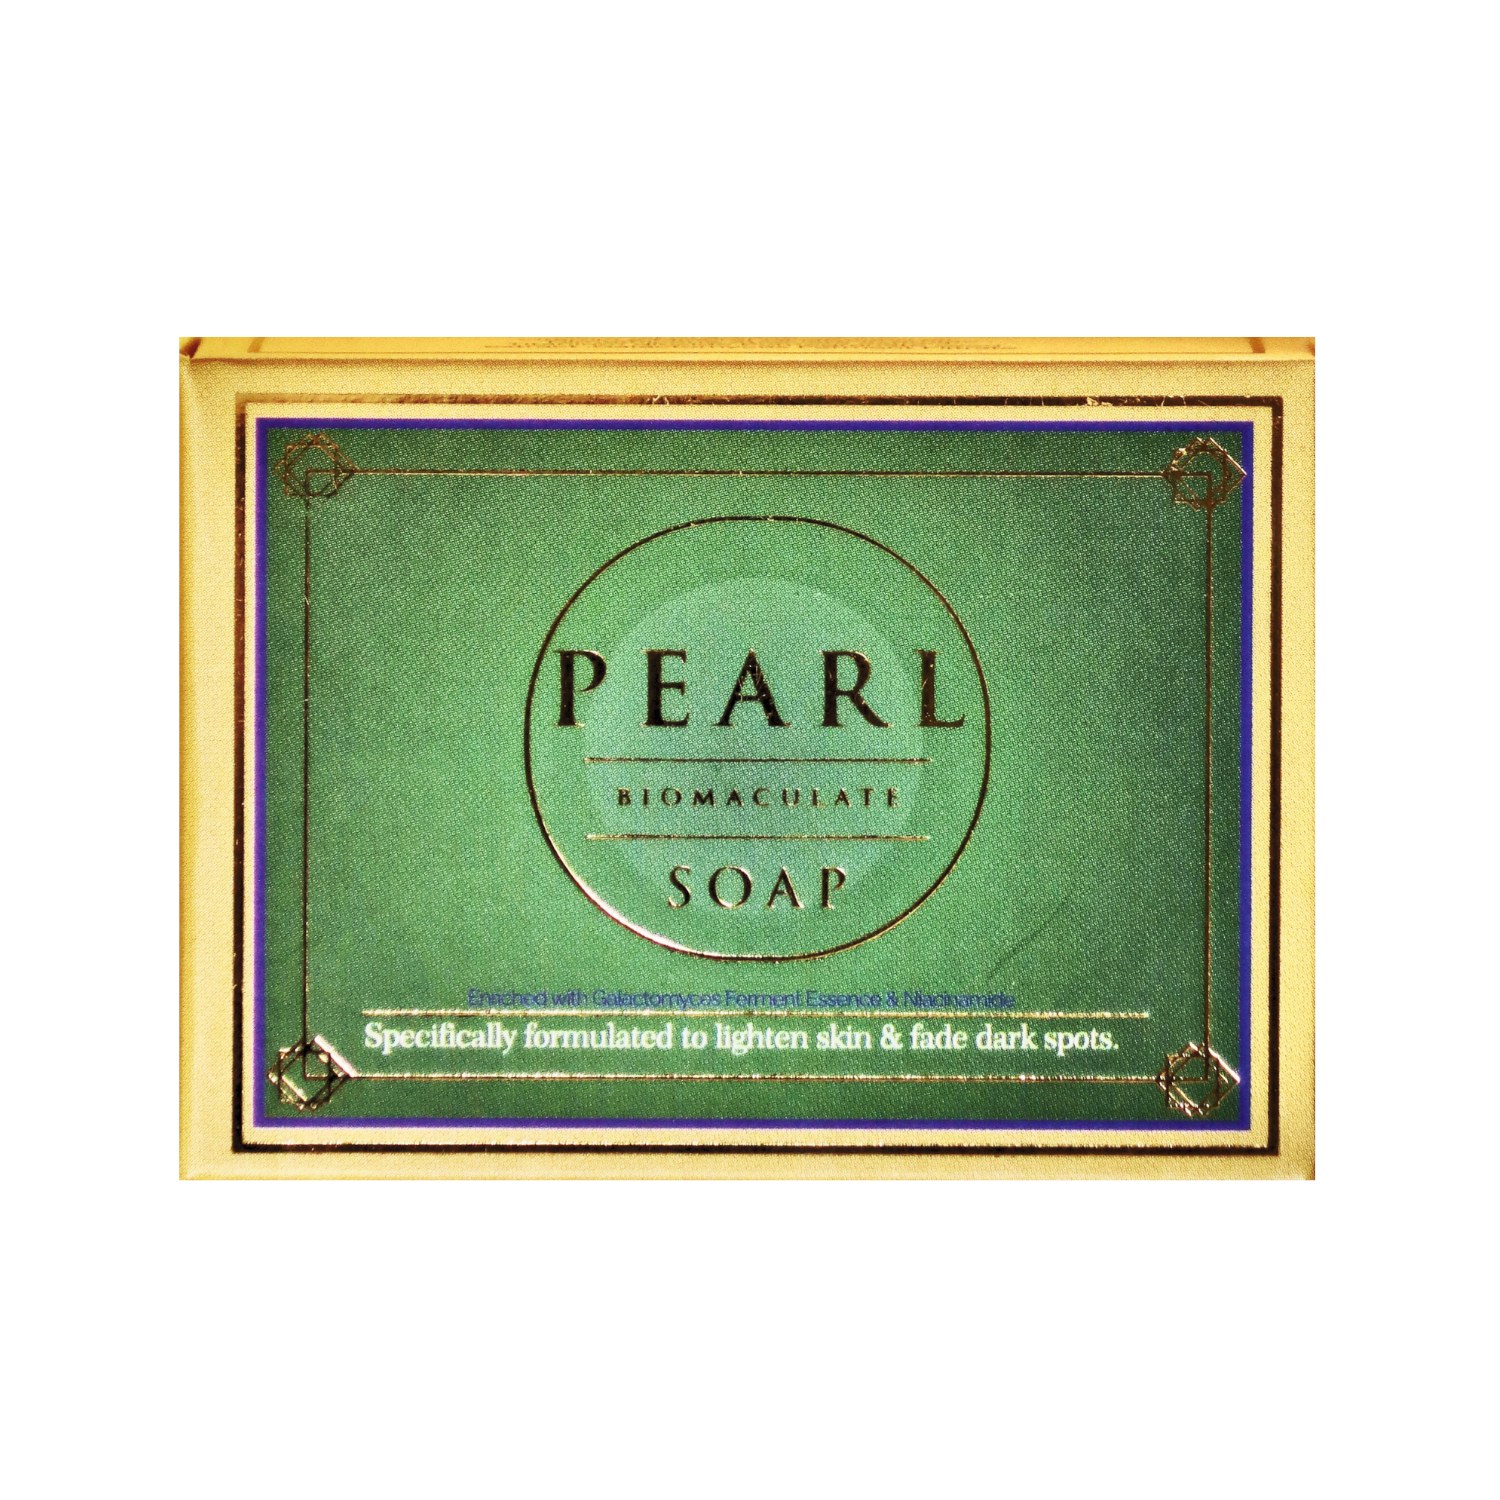 Pearl Biomaculate Soap - Skin Lightening & Fade Dark Spots